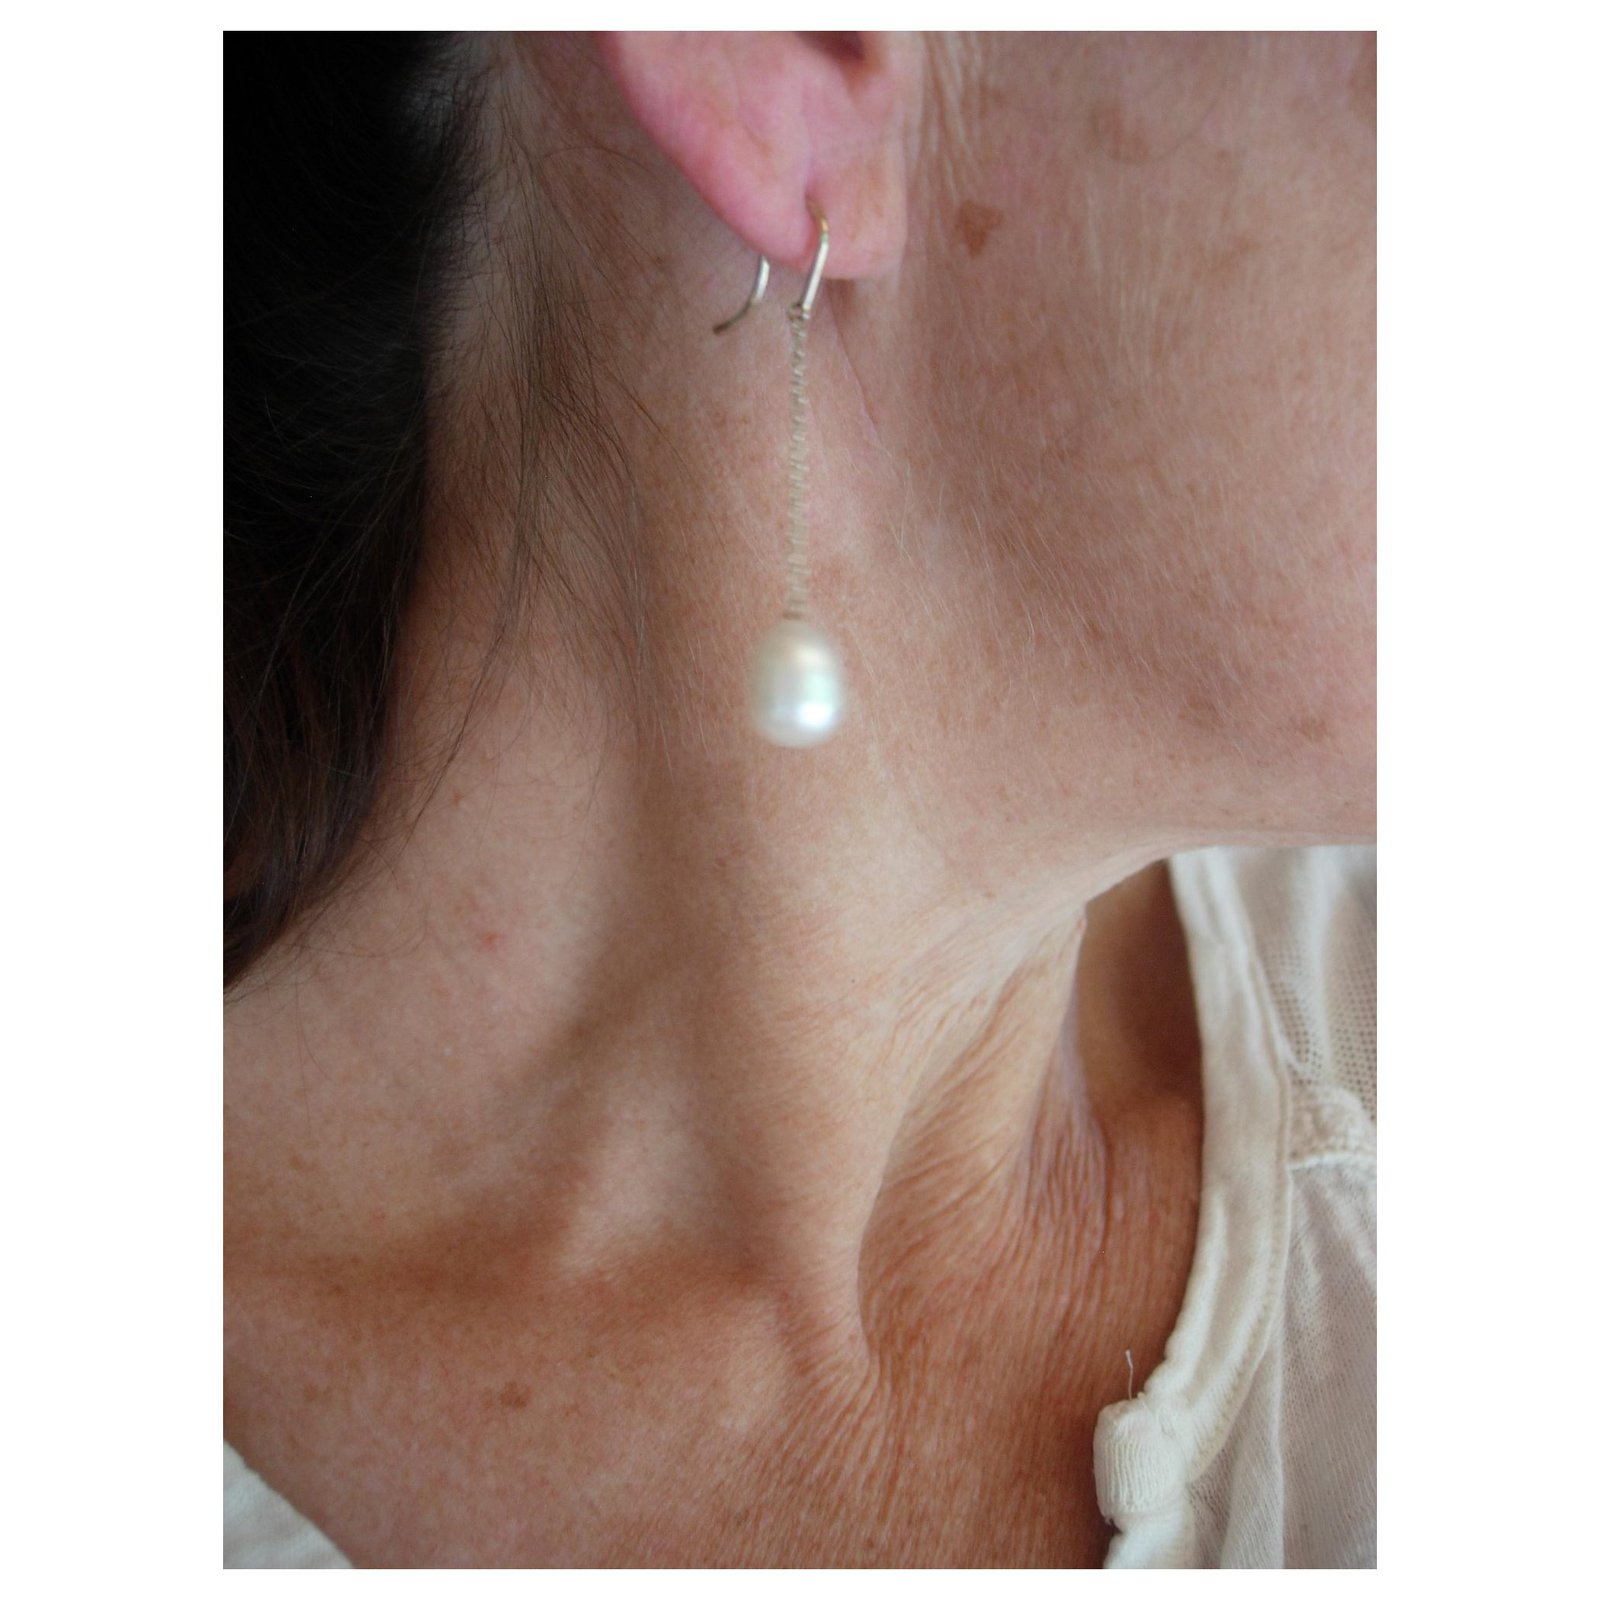 tiffany pearls by the yard earrings